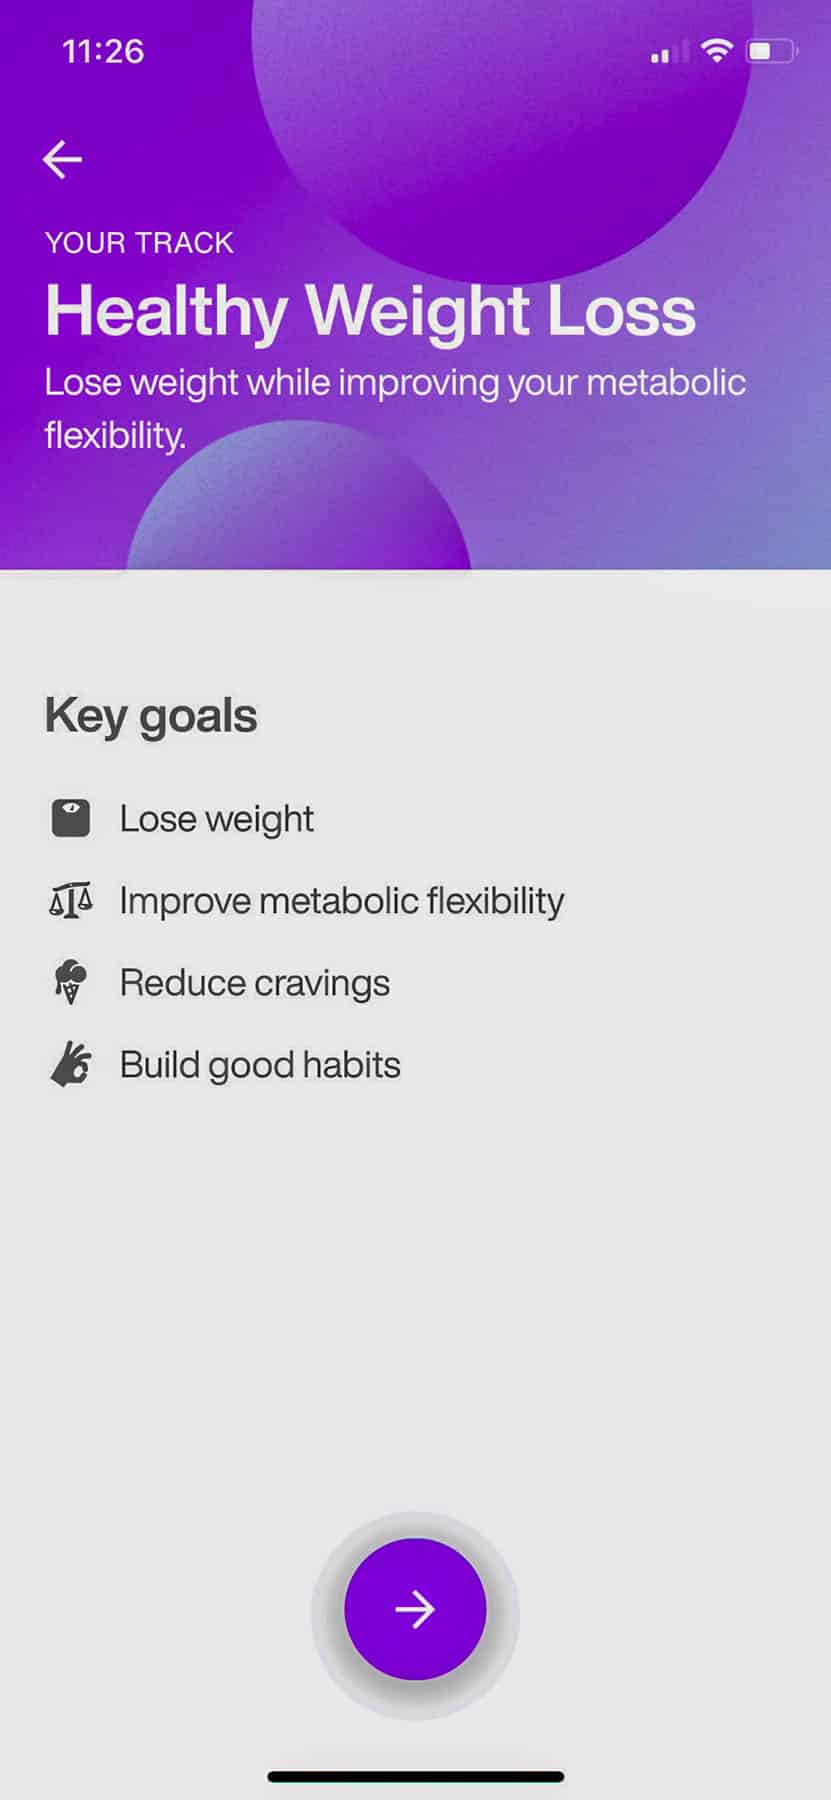 Lumen screenshot Key Goals: lose weight, improve metabolic flexibility, reduce cravings and build good habits